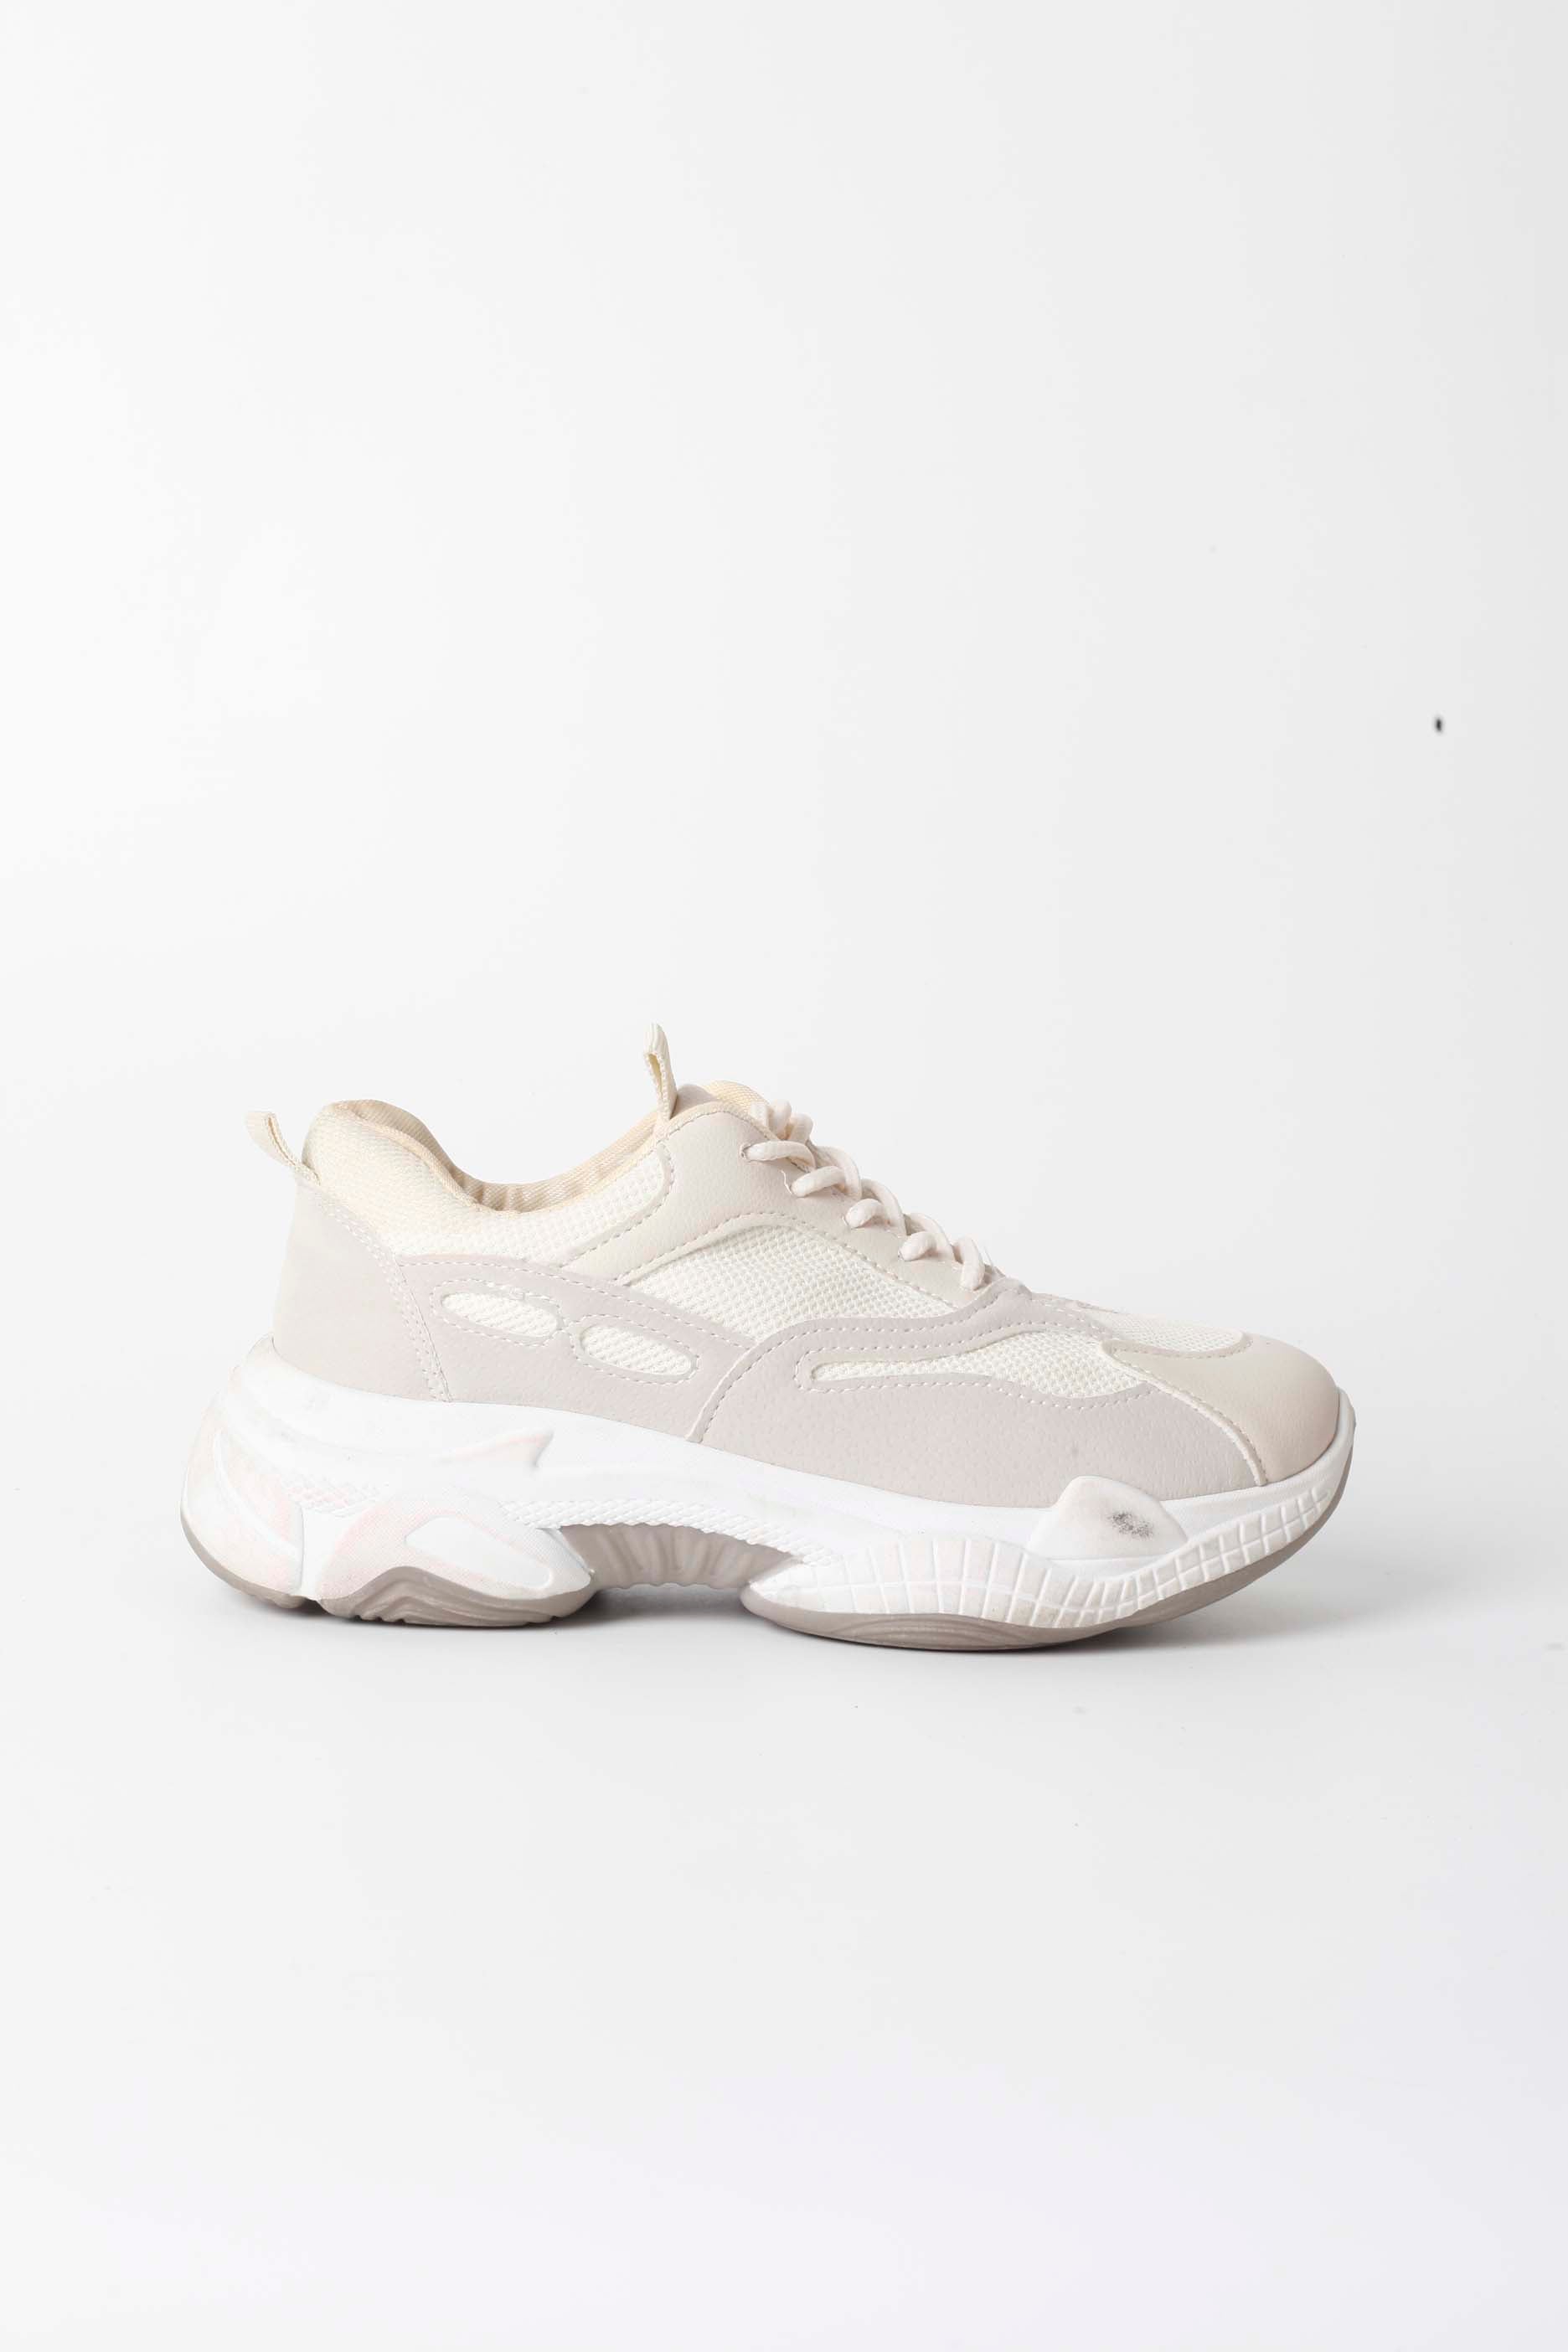 Platform Grey Cream Sneakers